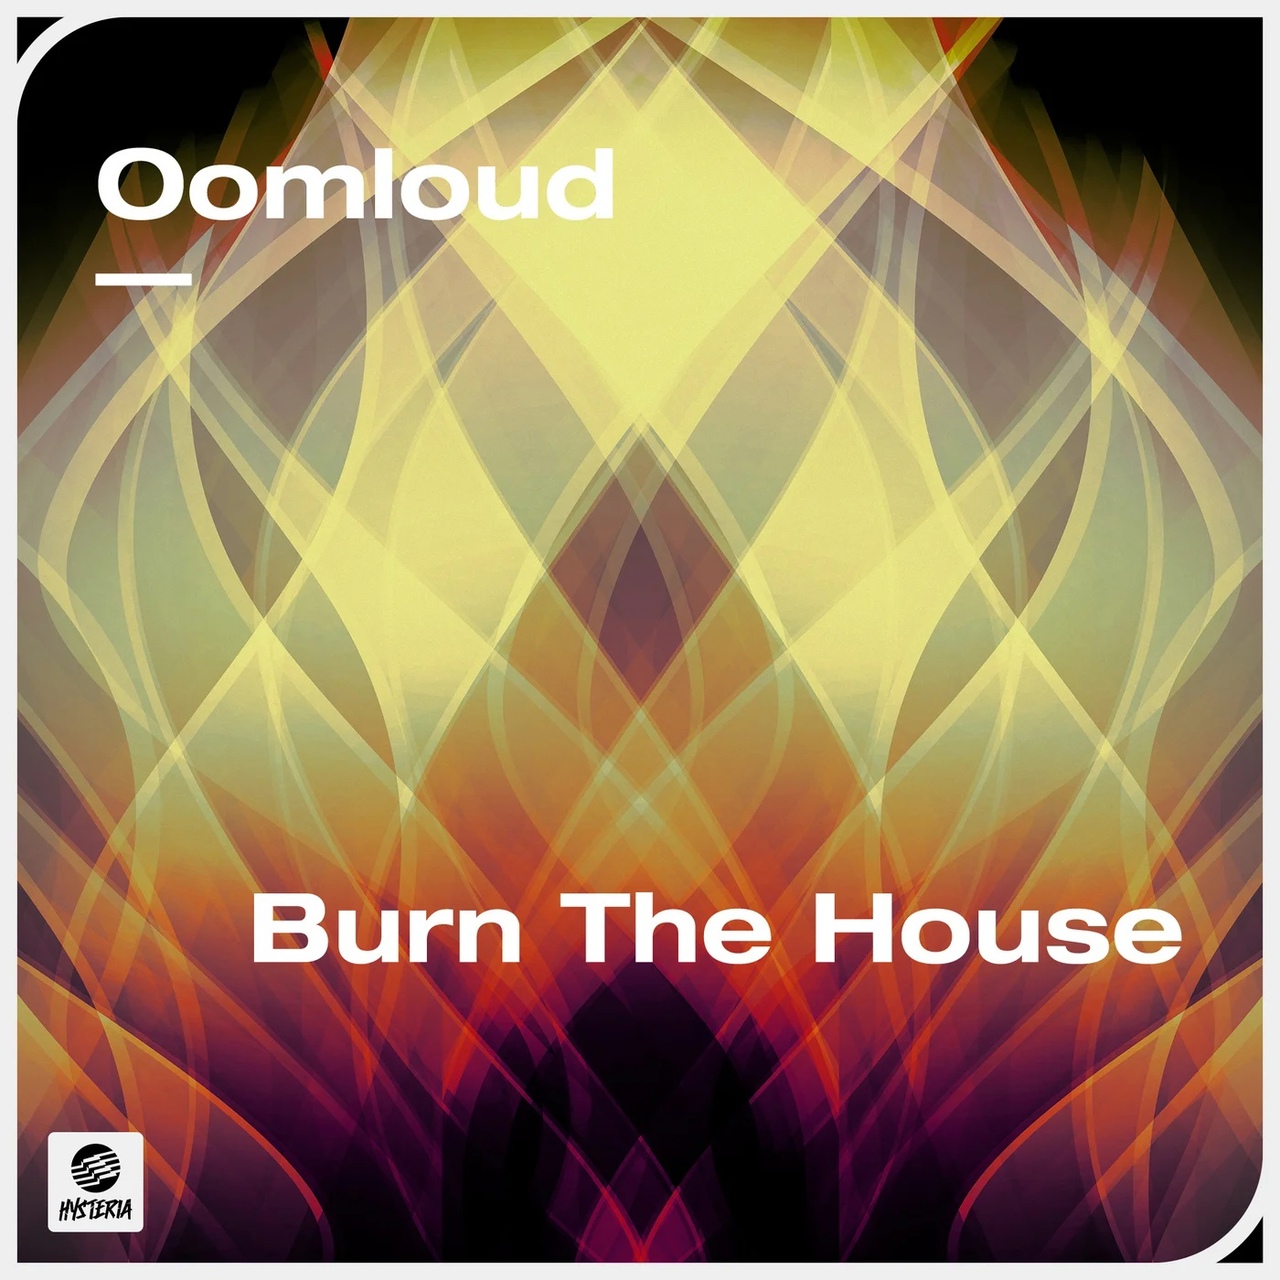 Oomloud — Burn The House cover artwork